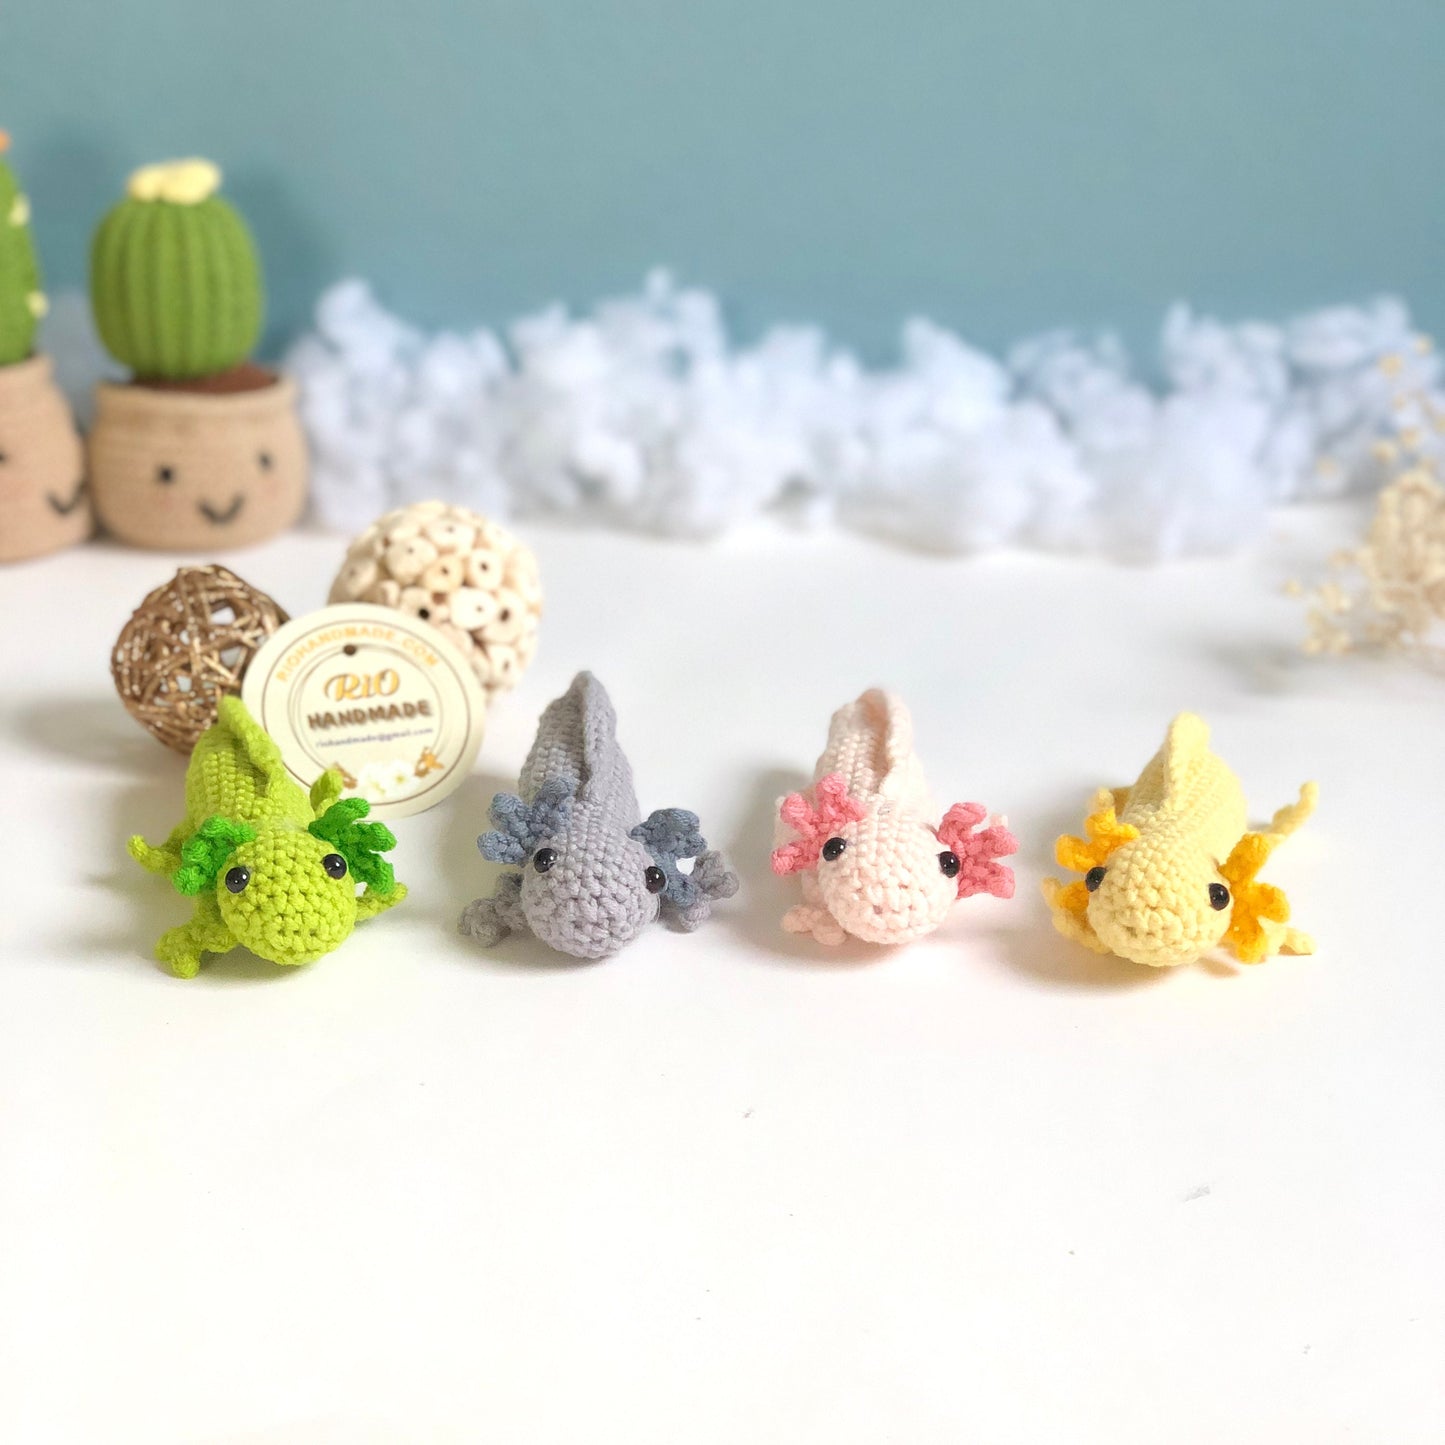 Handmade Axolotl, crochet Axolotl, amigurumi, plushie toy, gift, ornament